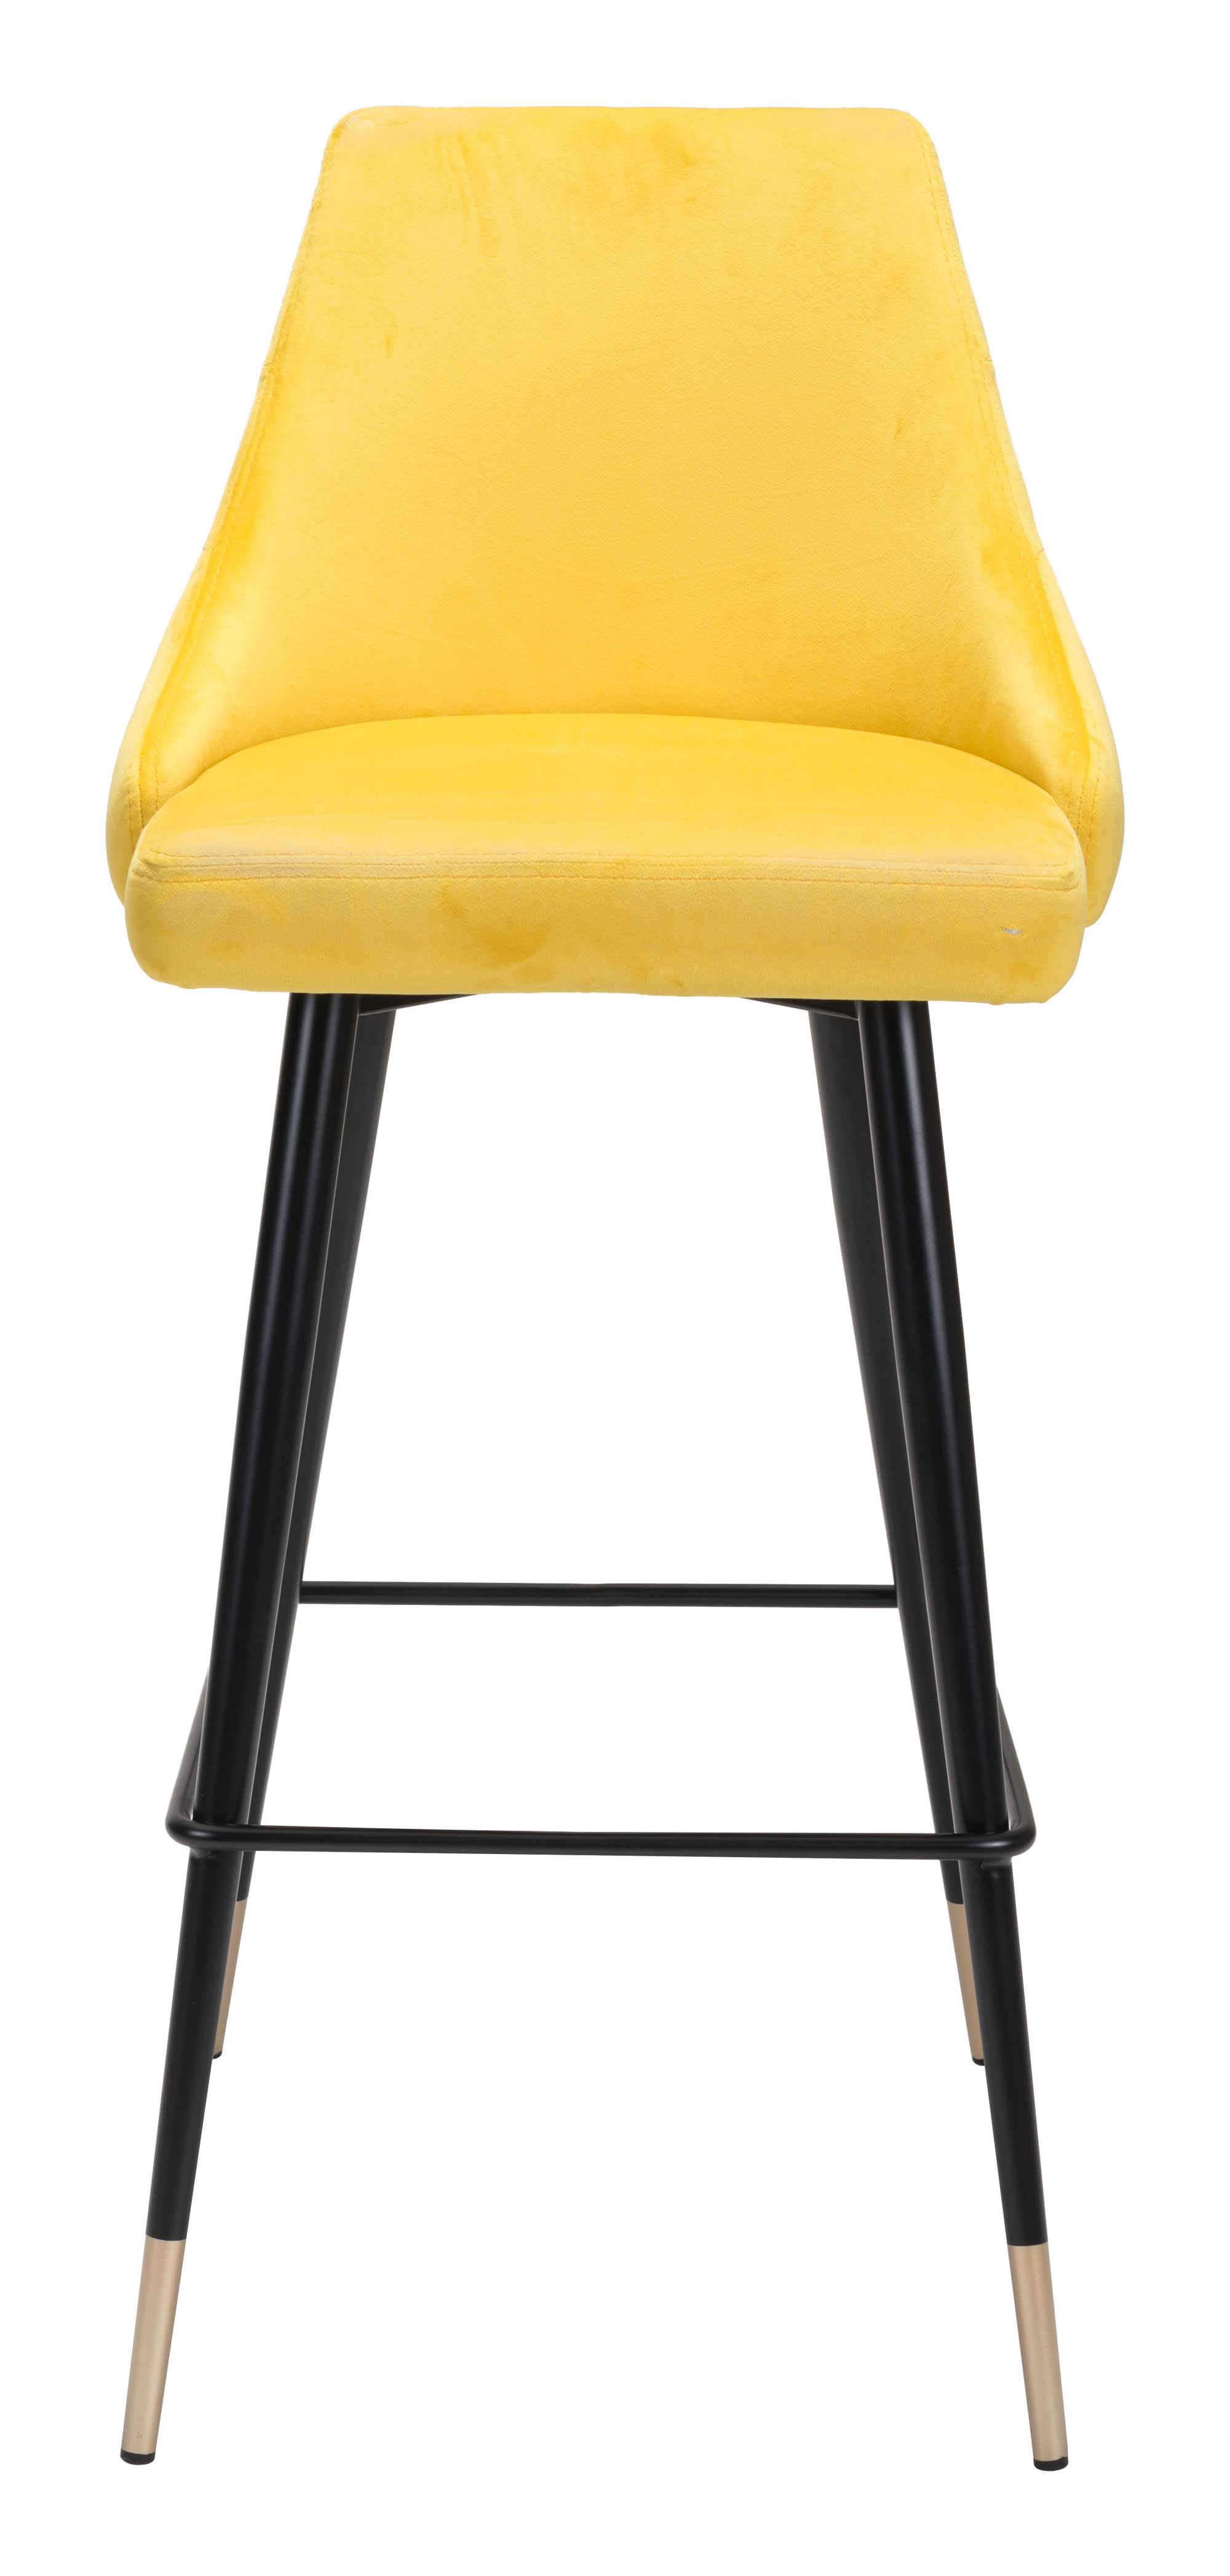 18.5" x 20.9" x 40.6" Yellow, Velvet, Stainless Steel, Bar Chair